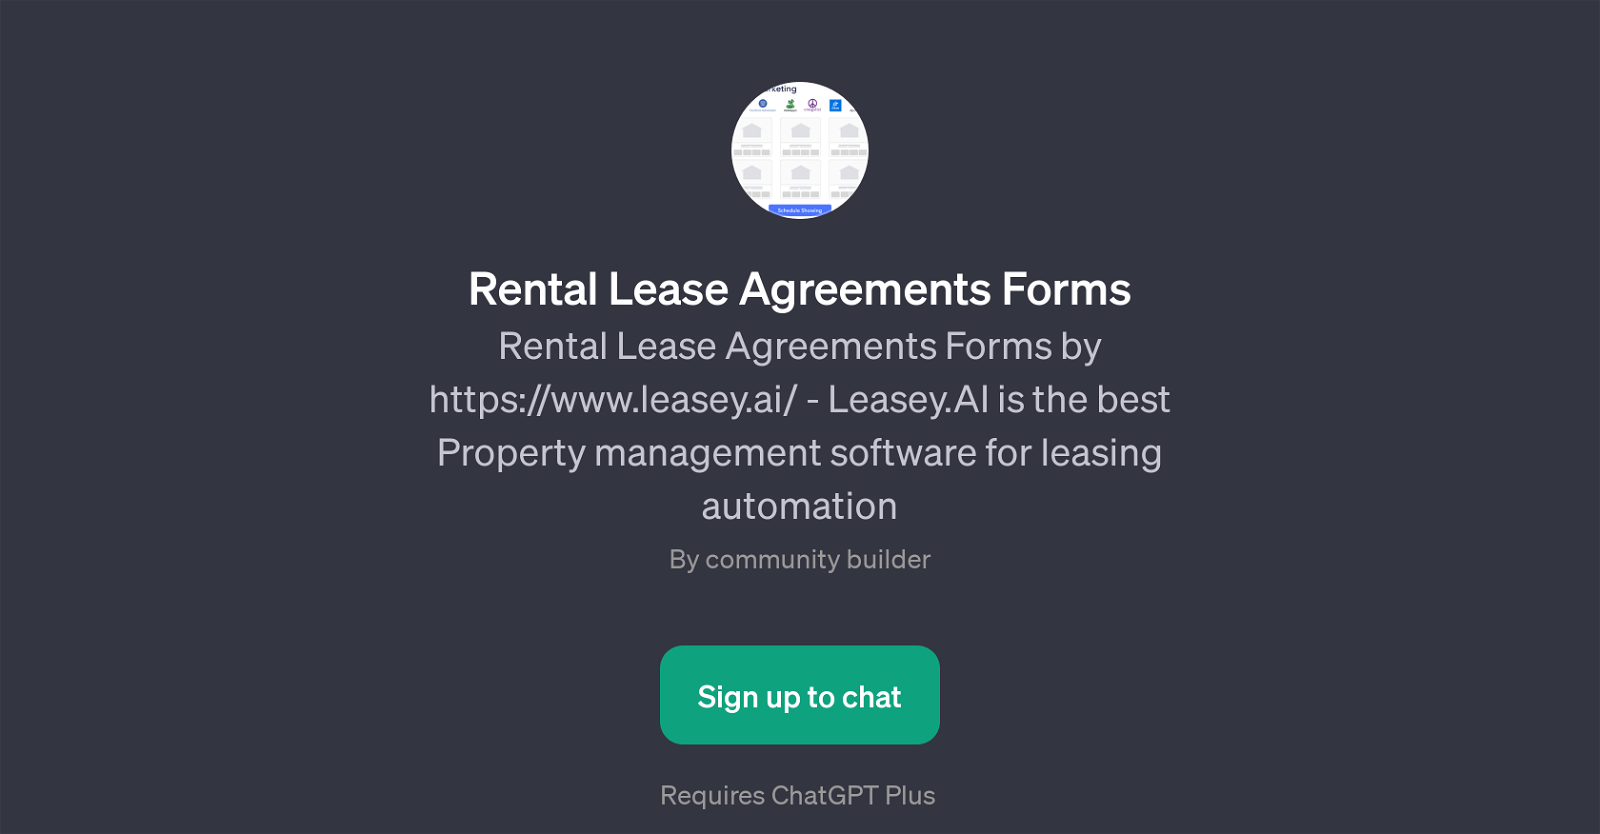 Leasey.AI website